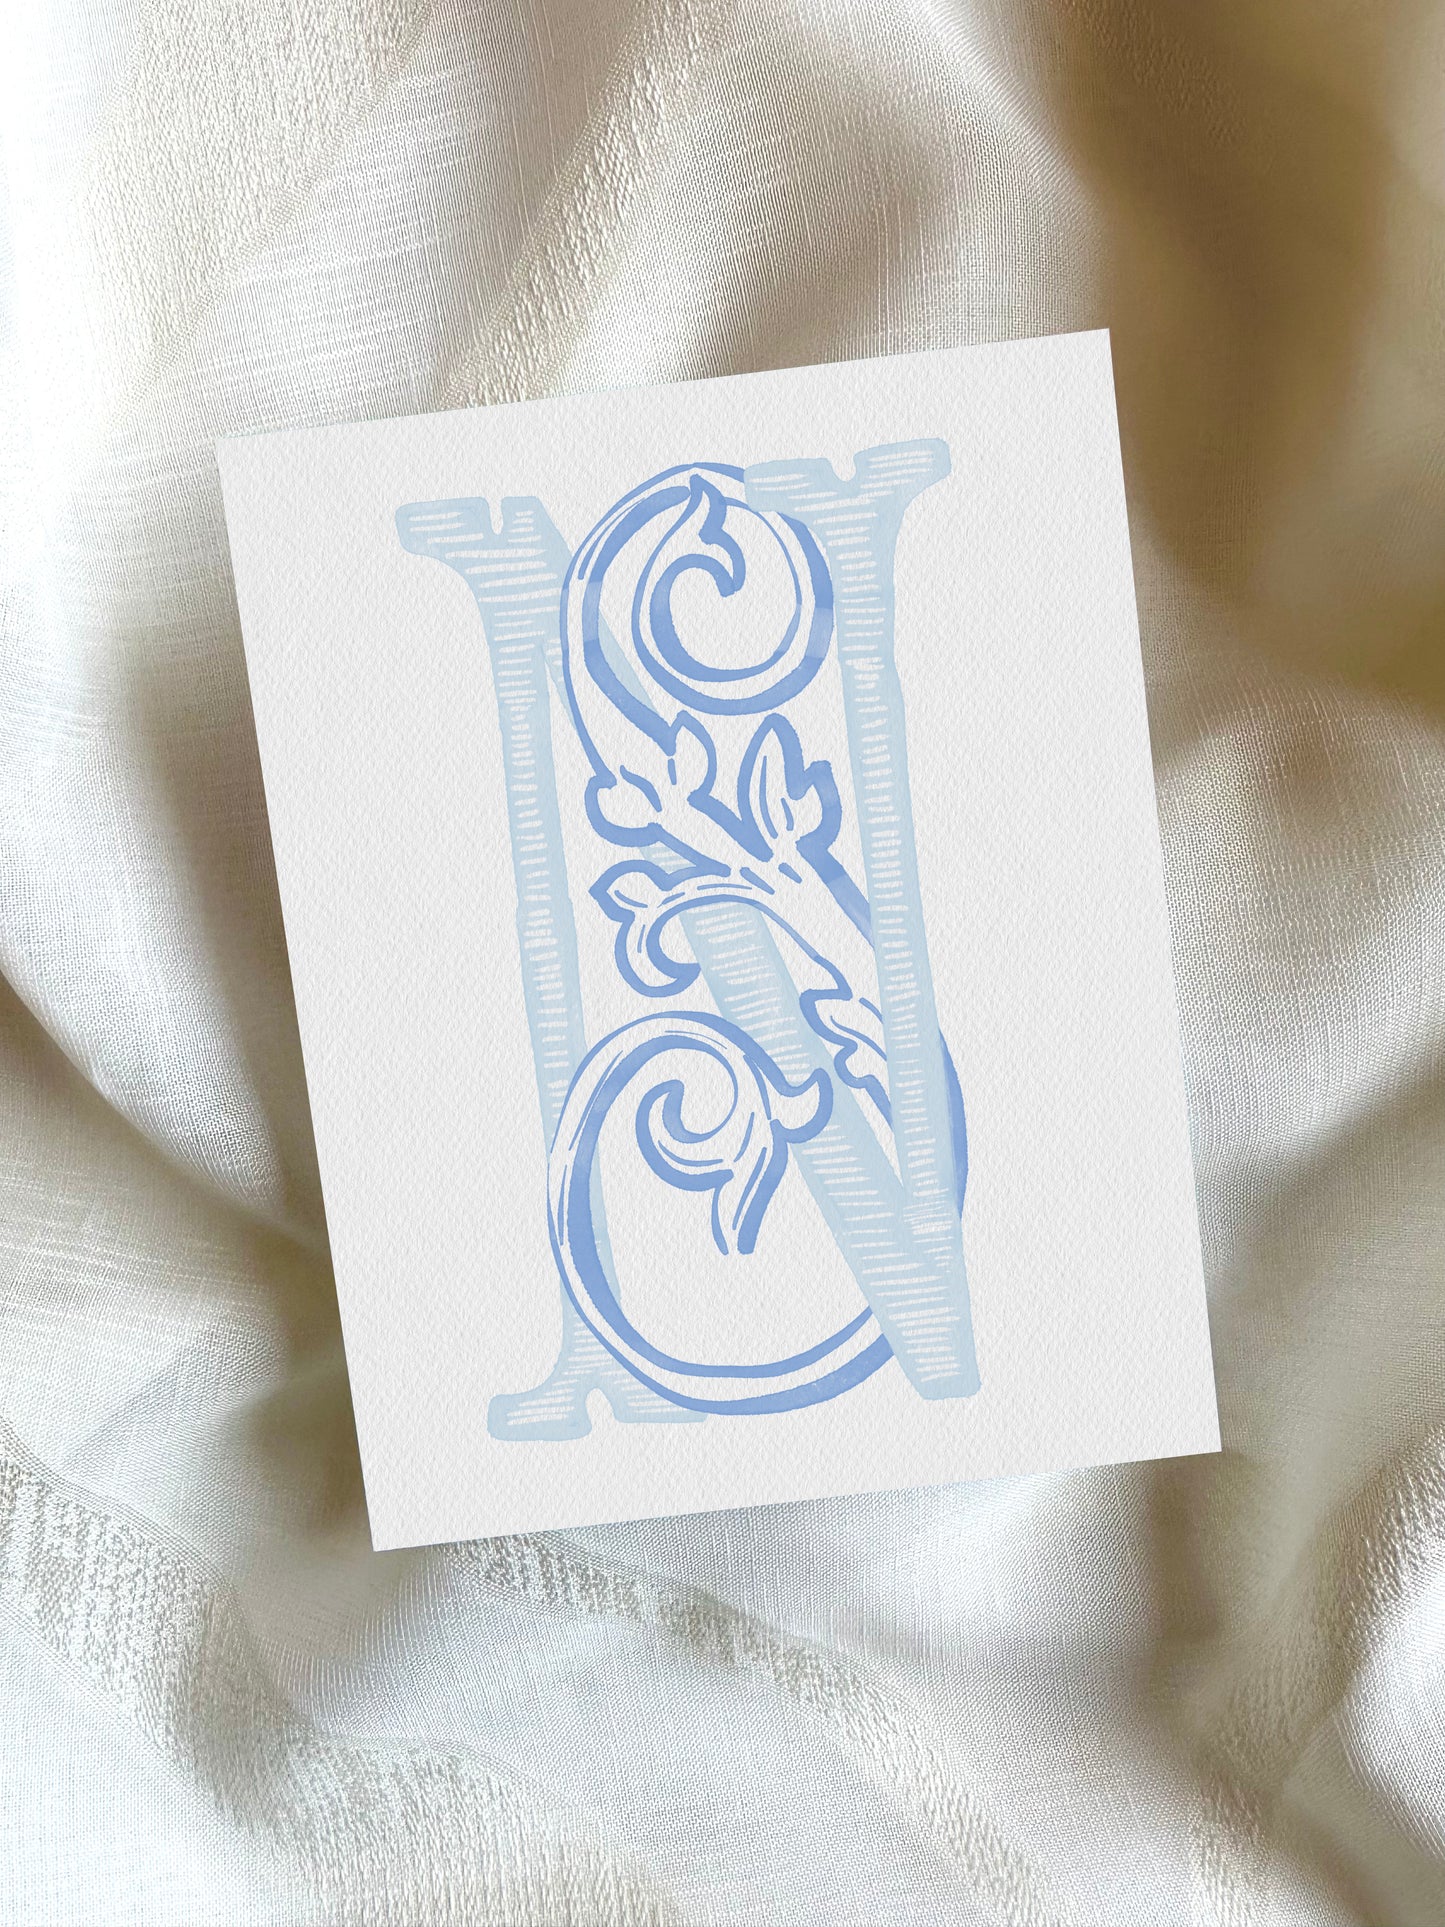 2 Letter Monogram with Letters NS SN | Digital Download - Wedding Monogram SVG, Personal Logo, Wedding Logo for Wedding Invitations The Wedding Crest Lab